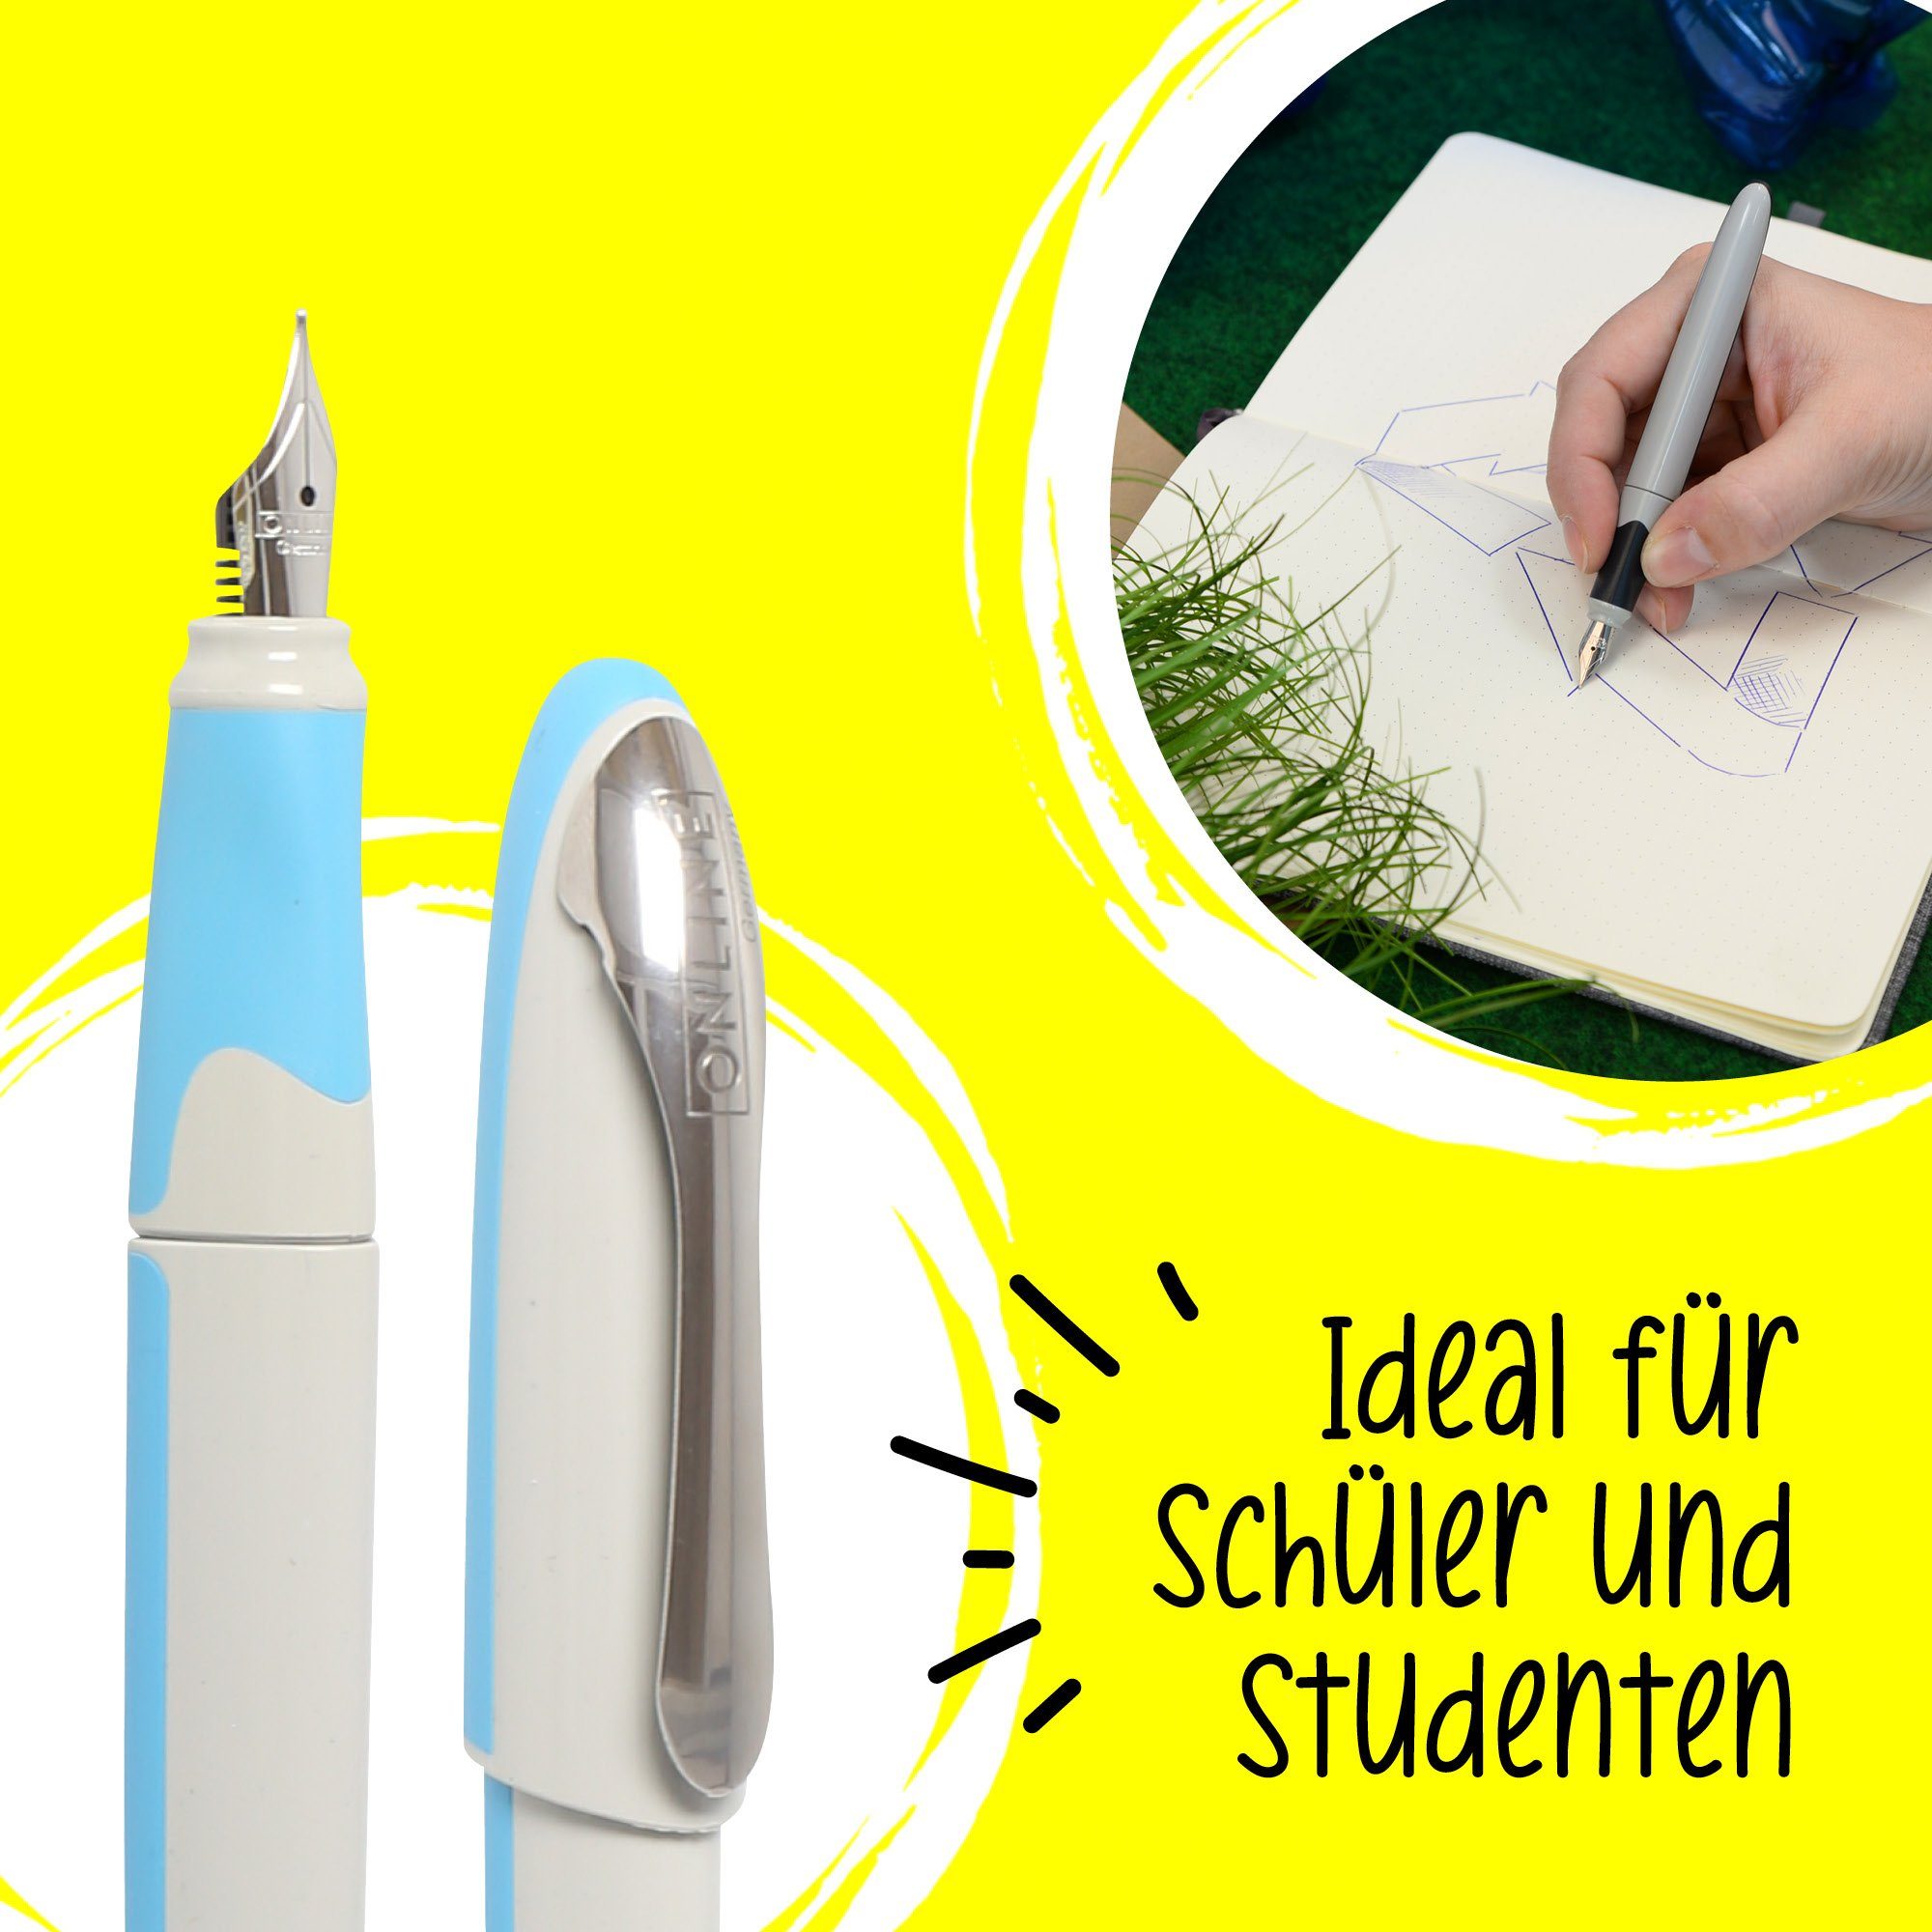 Air, Online Engel die Blauer Zertifiziert, ideal für Pen Schule ergonomisch, Füller Füller